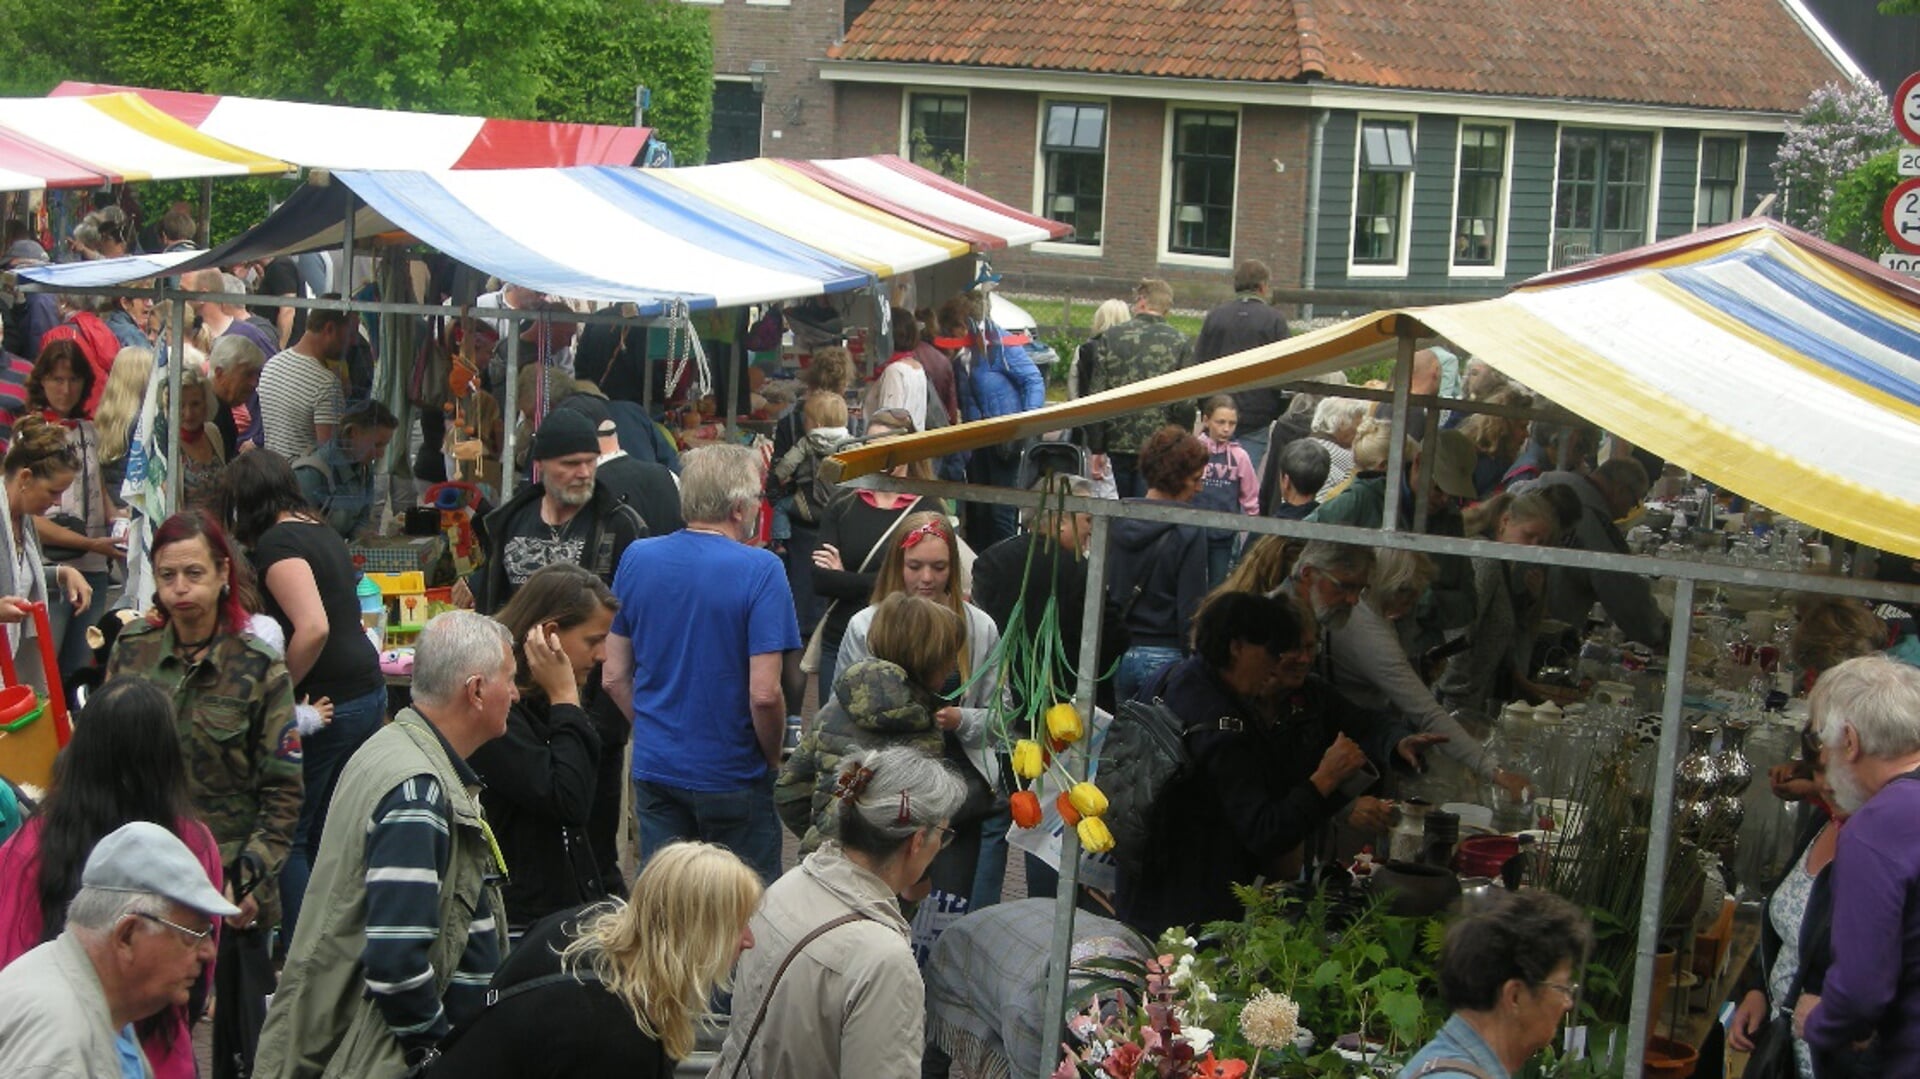 Rommelmarkt in West-Graftdijk.